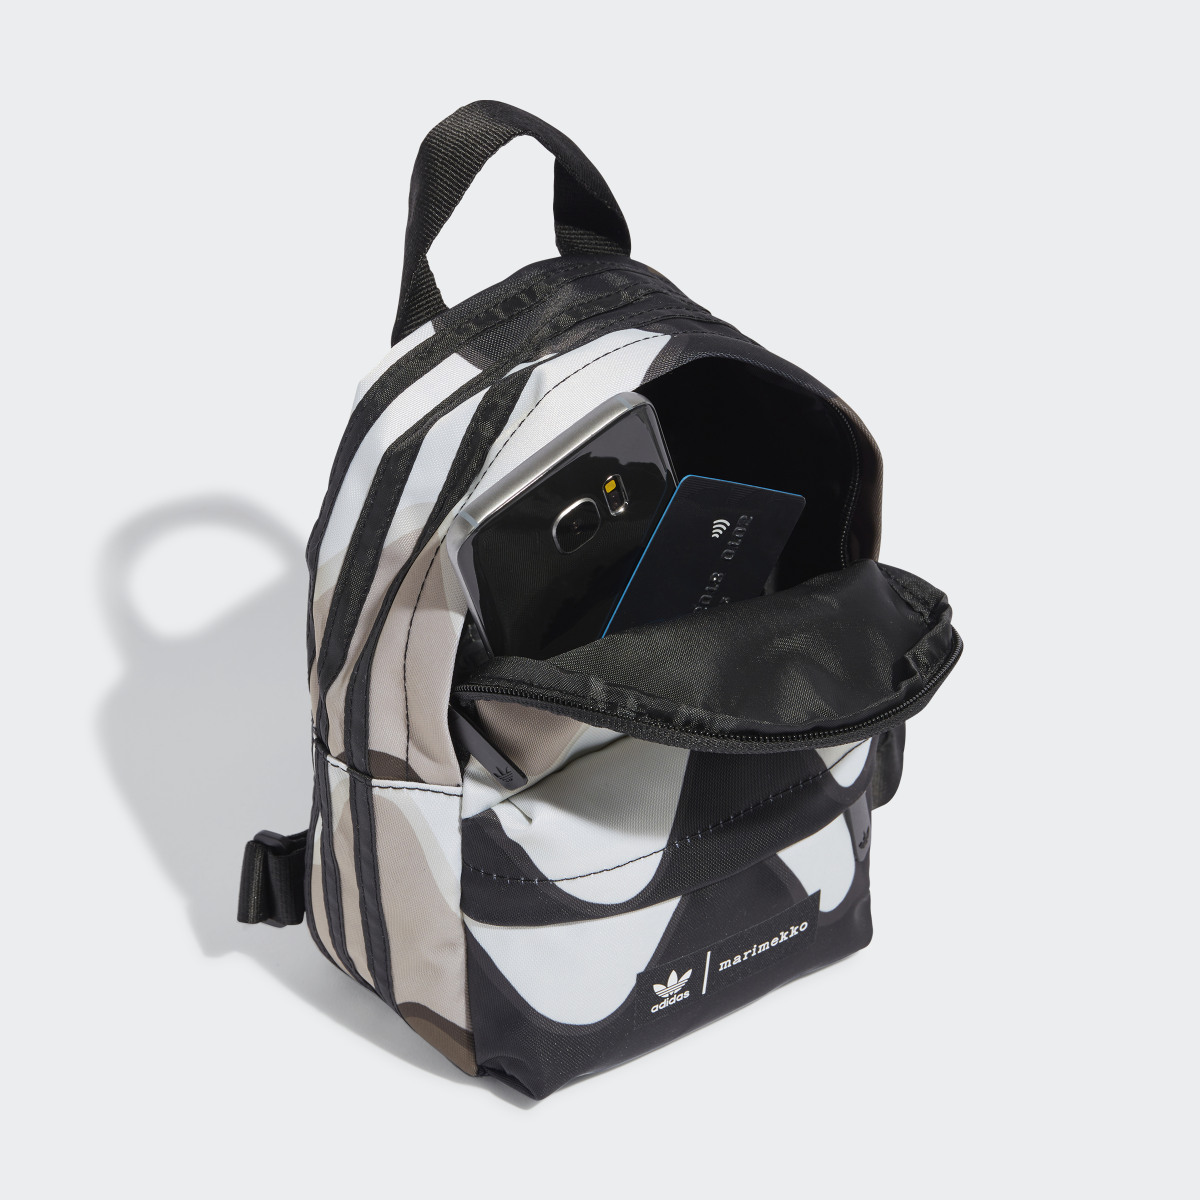 Adidas x Marimekko Mini Backpack. 5